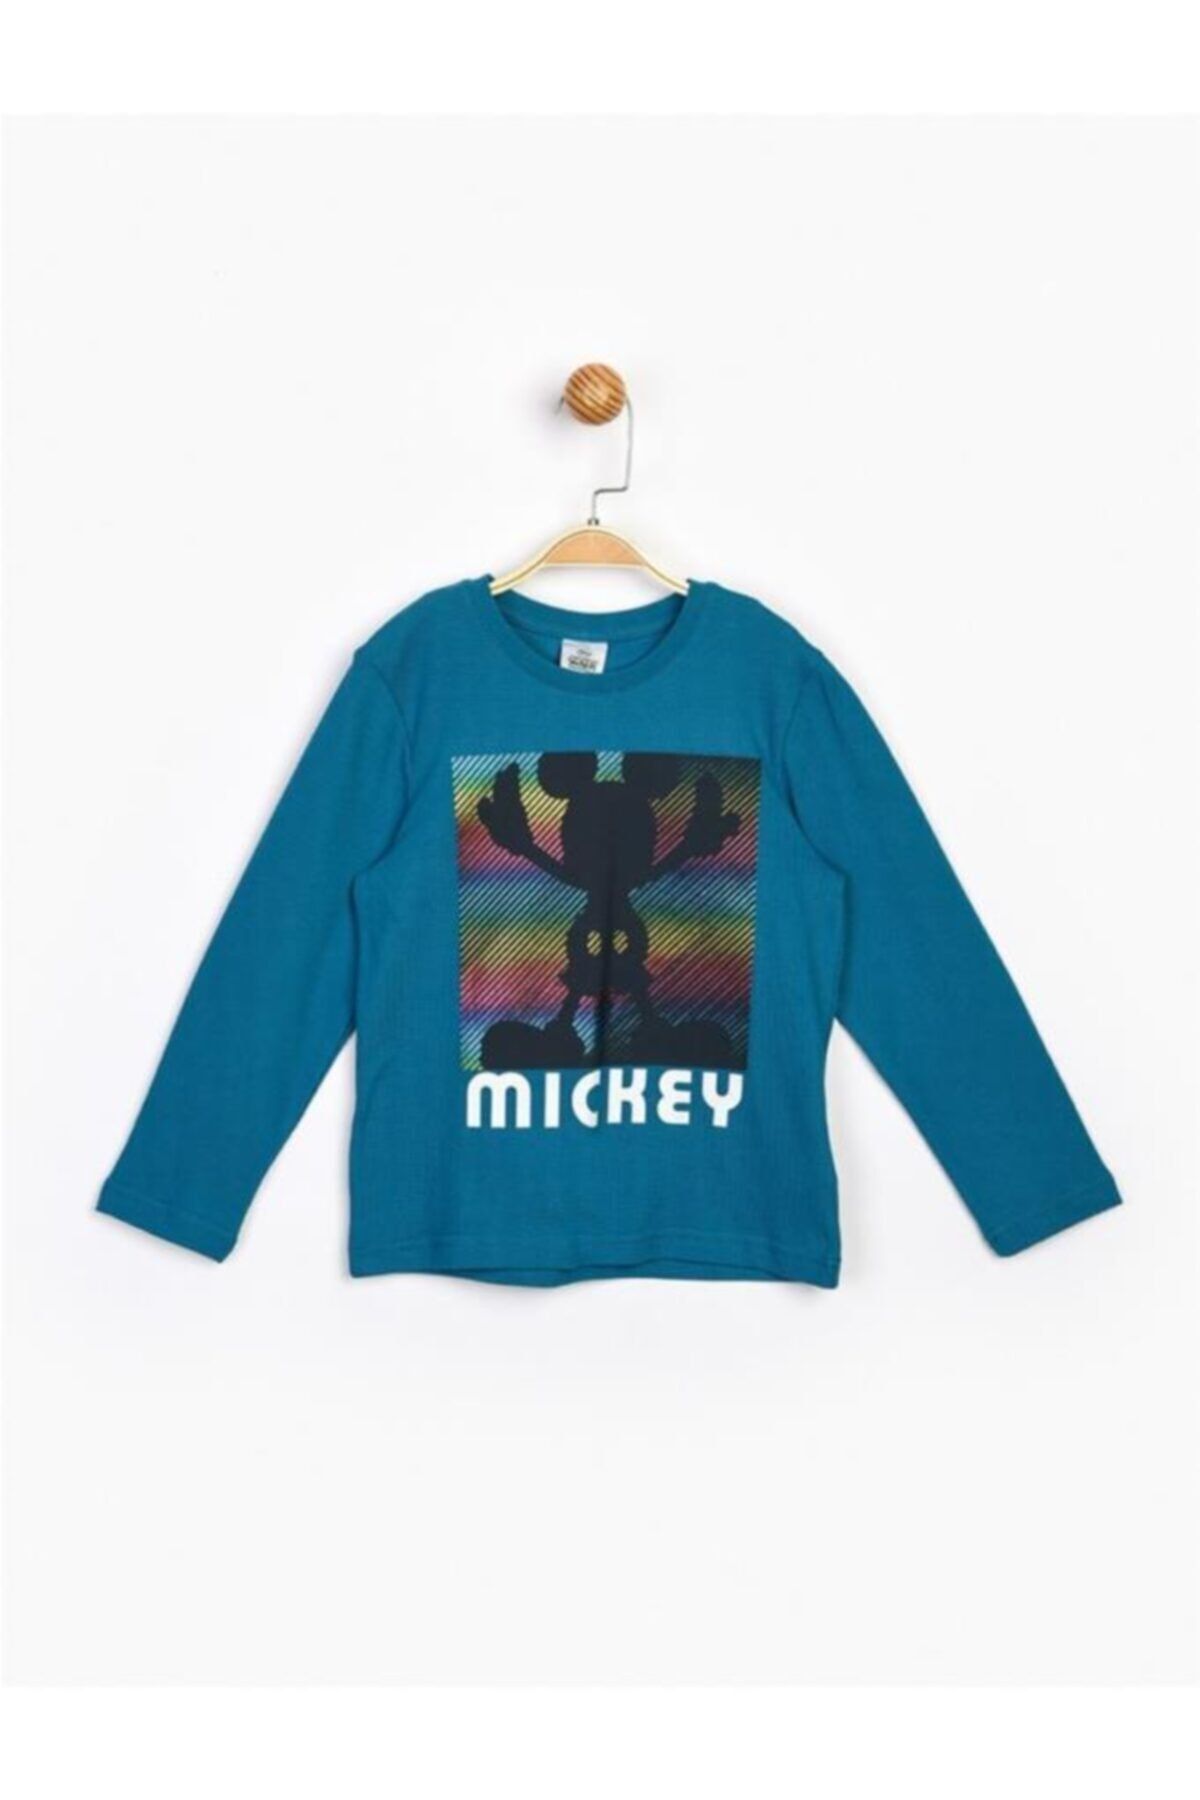 Mickey Mouse Mickey Uzun Kol Çocuk Tişört 16232